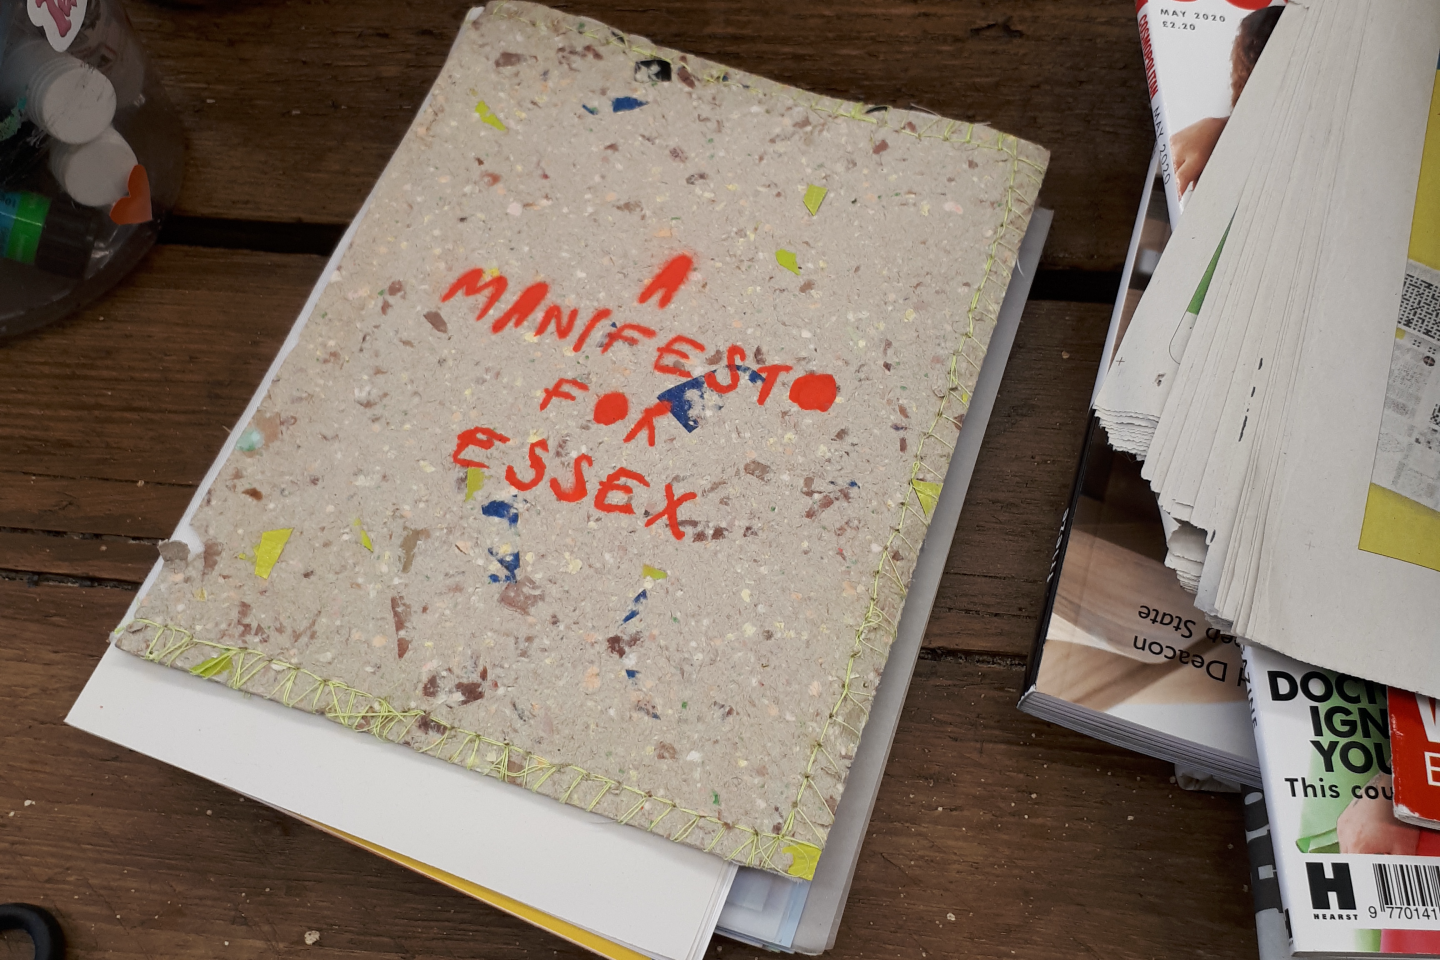 manifesto_for_essex_zine 3x2